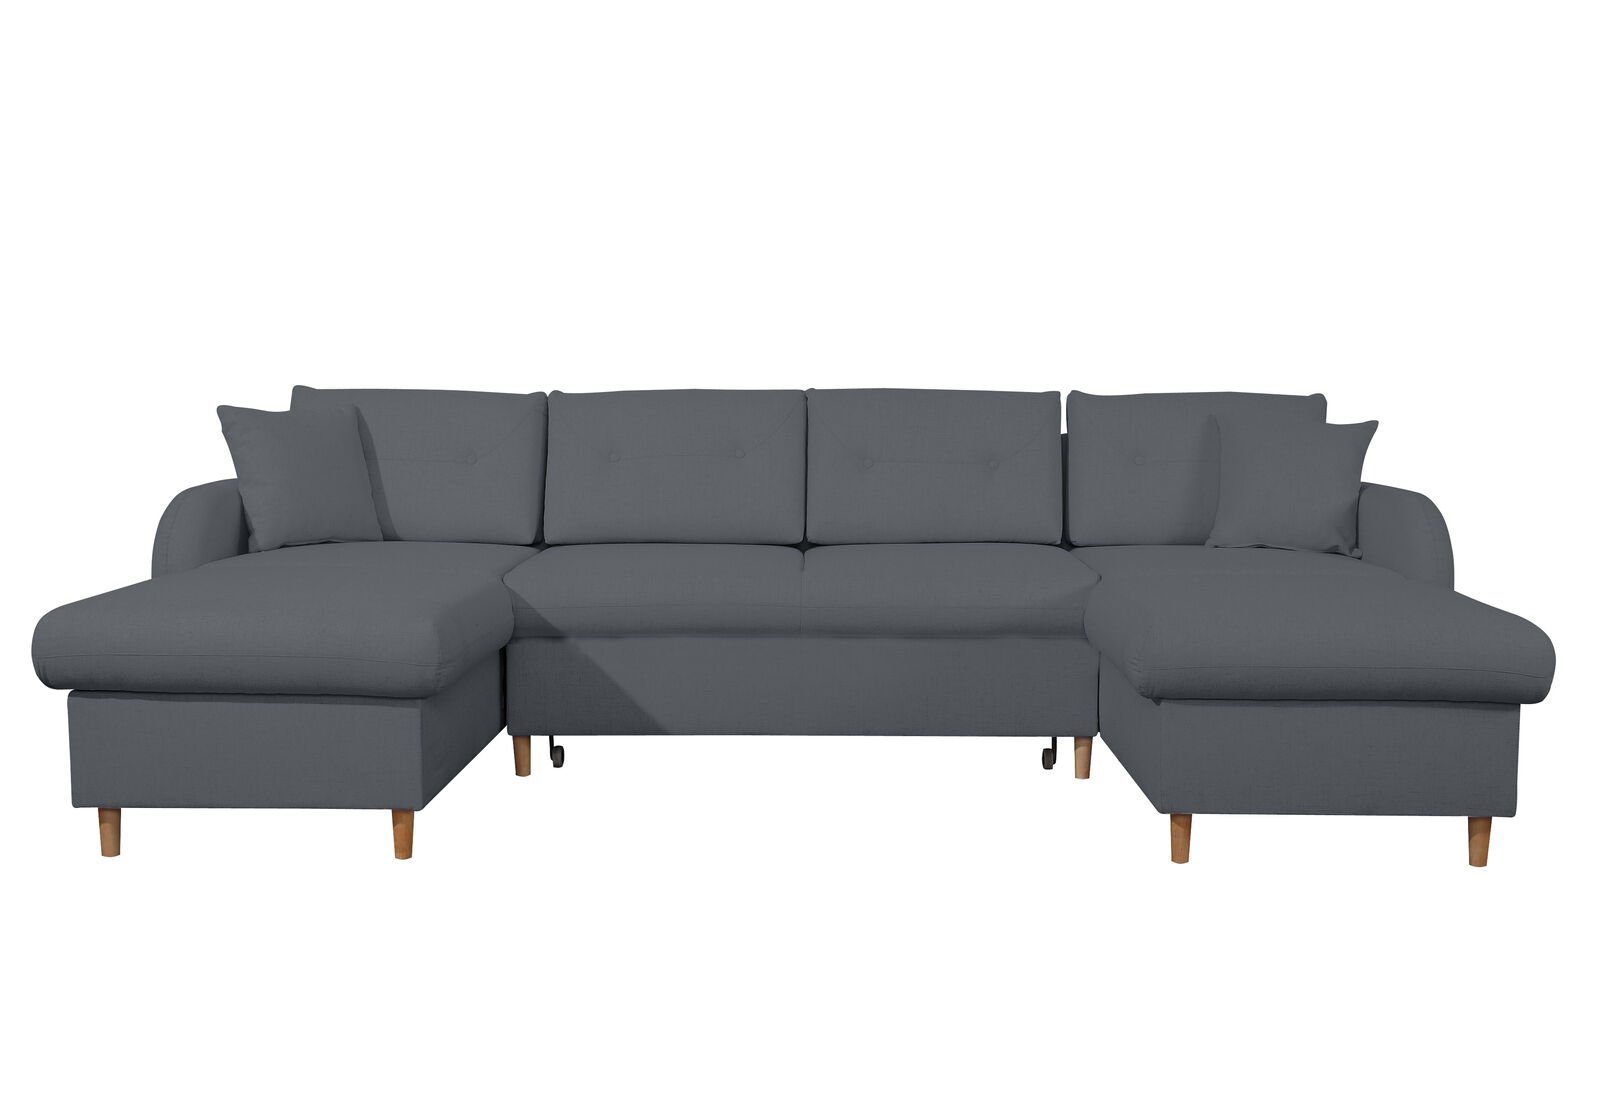 JVmoebel Ecksofa Wohnlandschaft Ecksofa Europe Design, in U-Form Stoff Couch Bettfunktion Schwarz Made